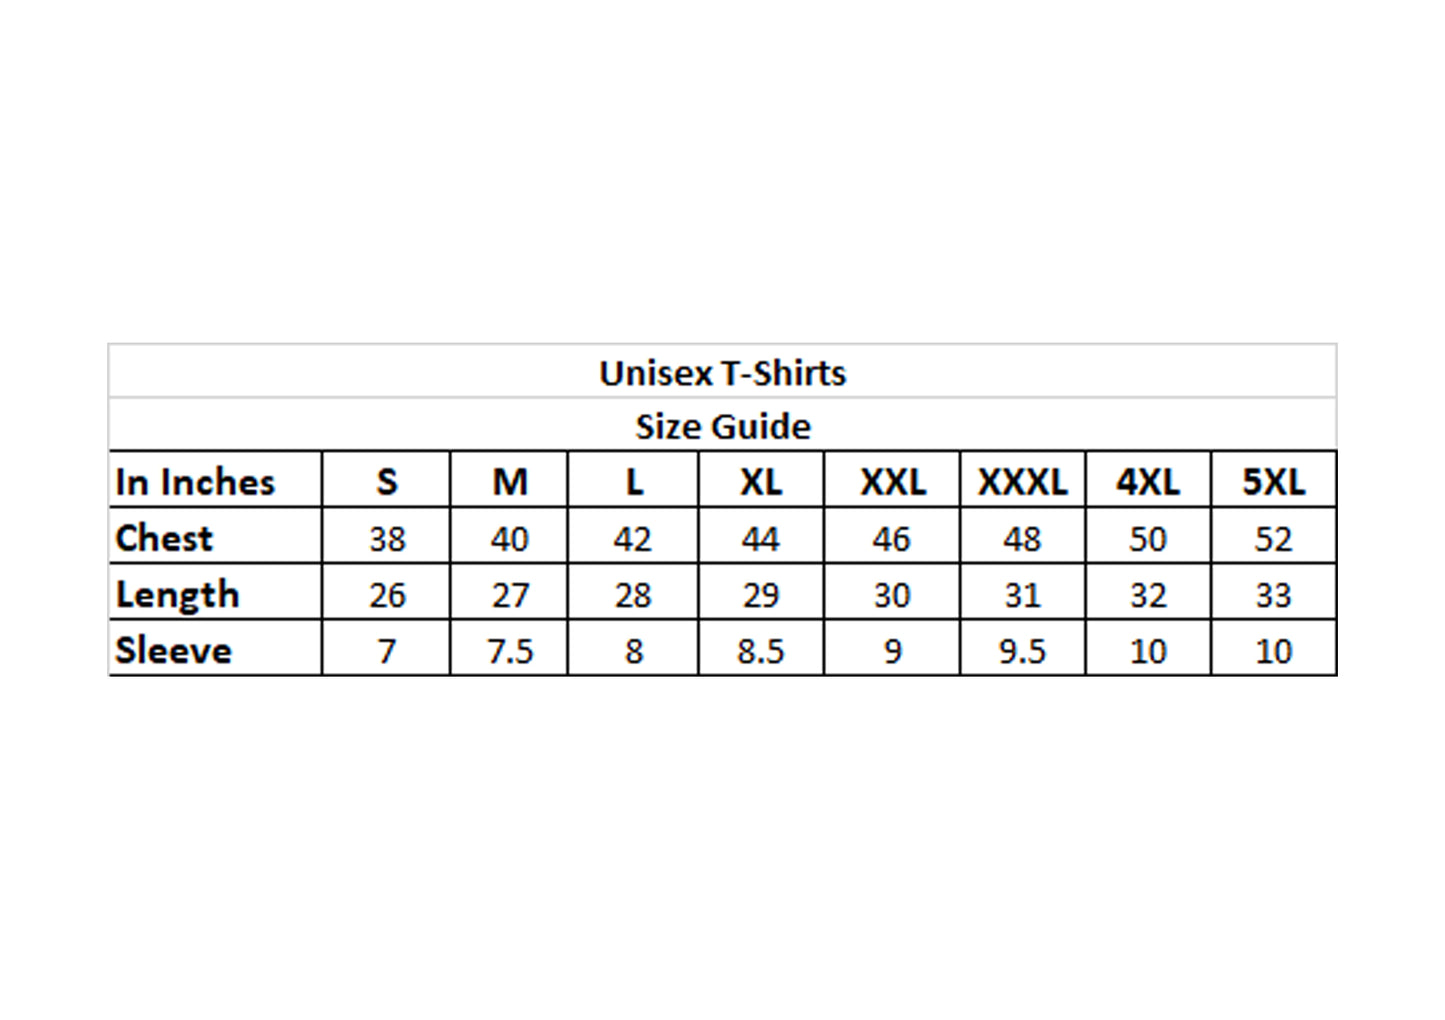 ANDORRA Seasons Unisex T-Shirt (Black)